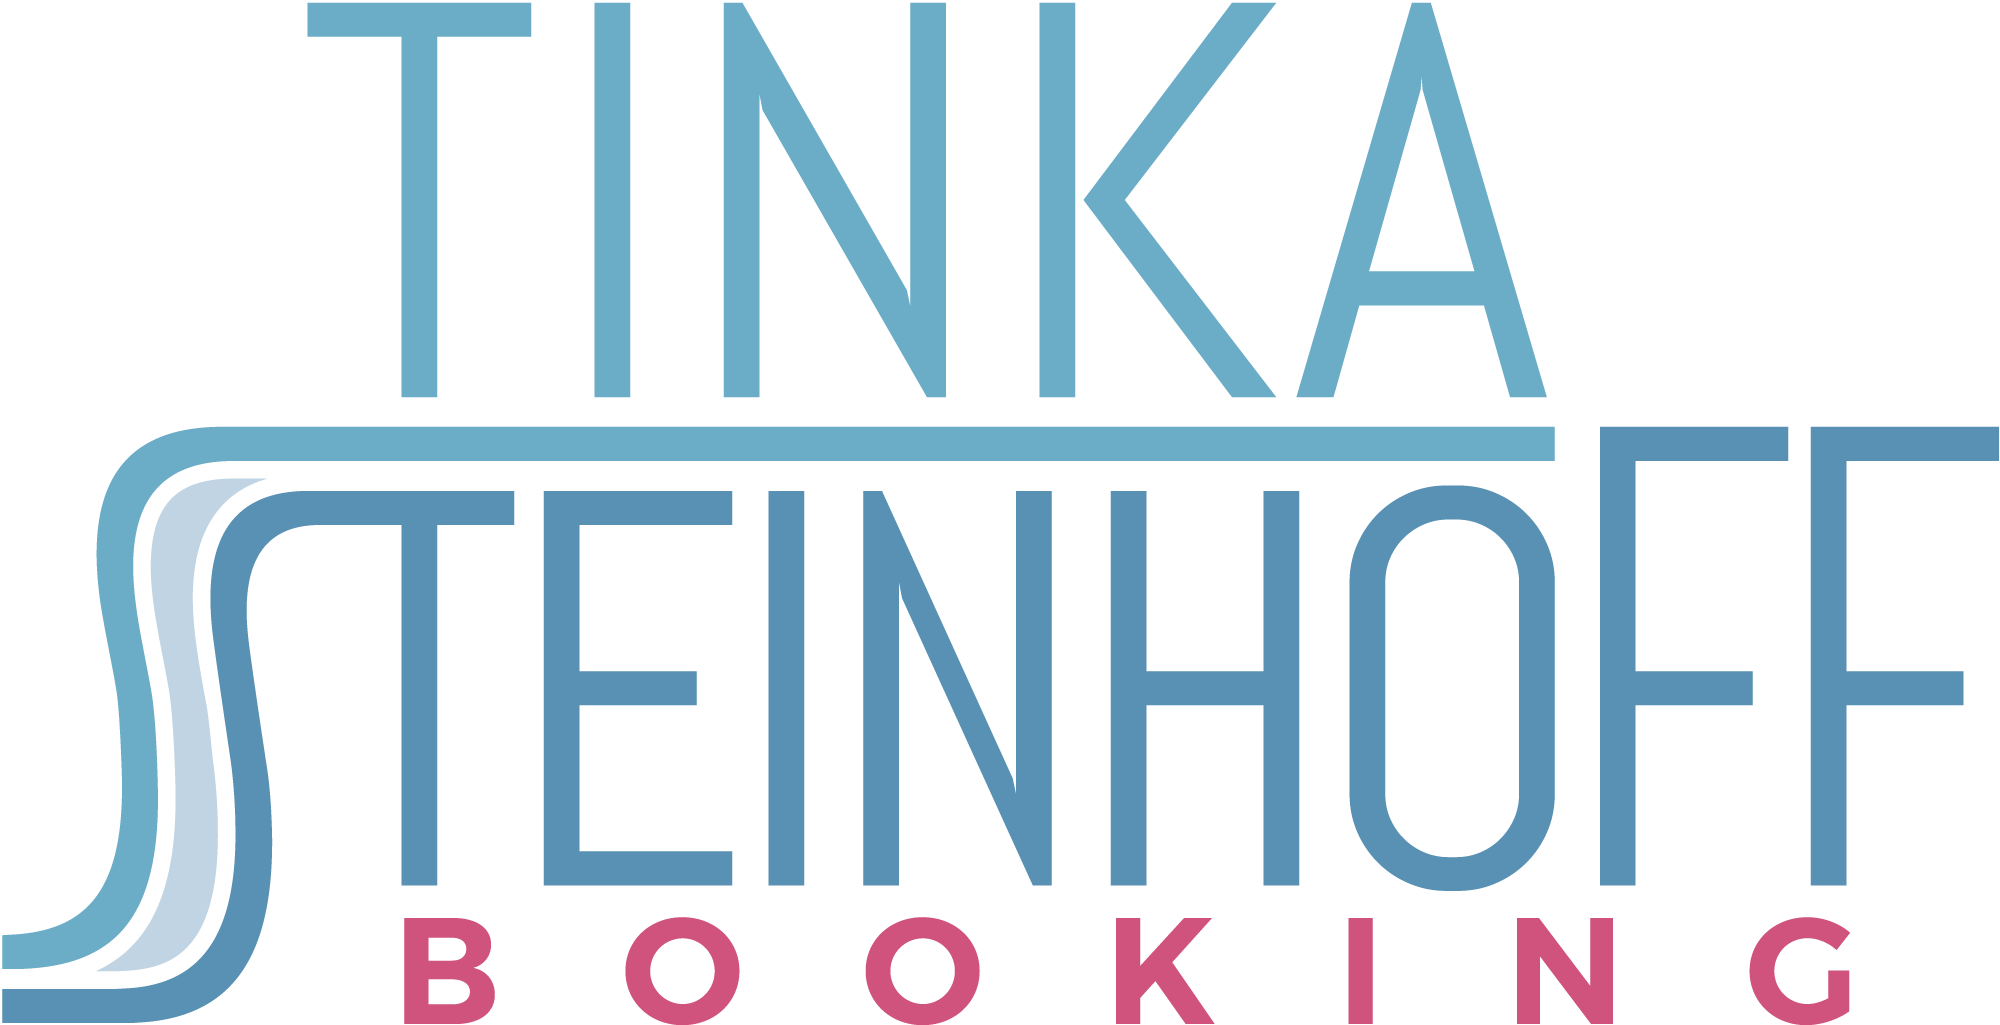 Tinka Steinhoff Booking